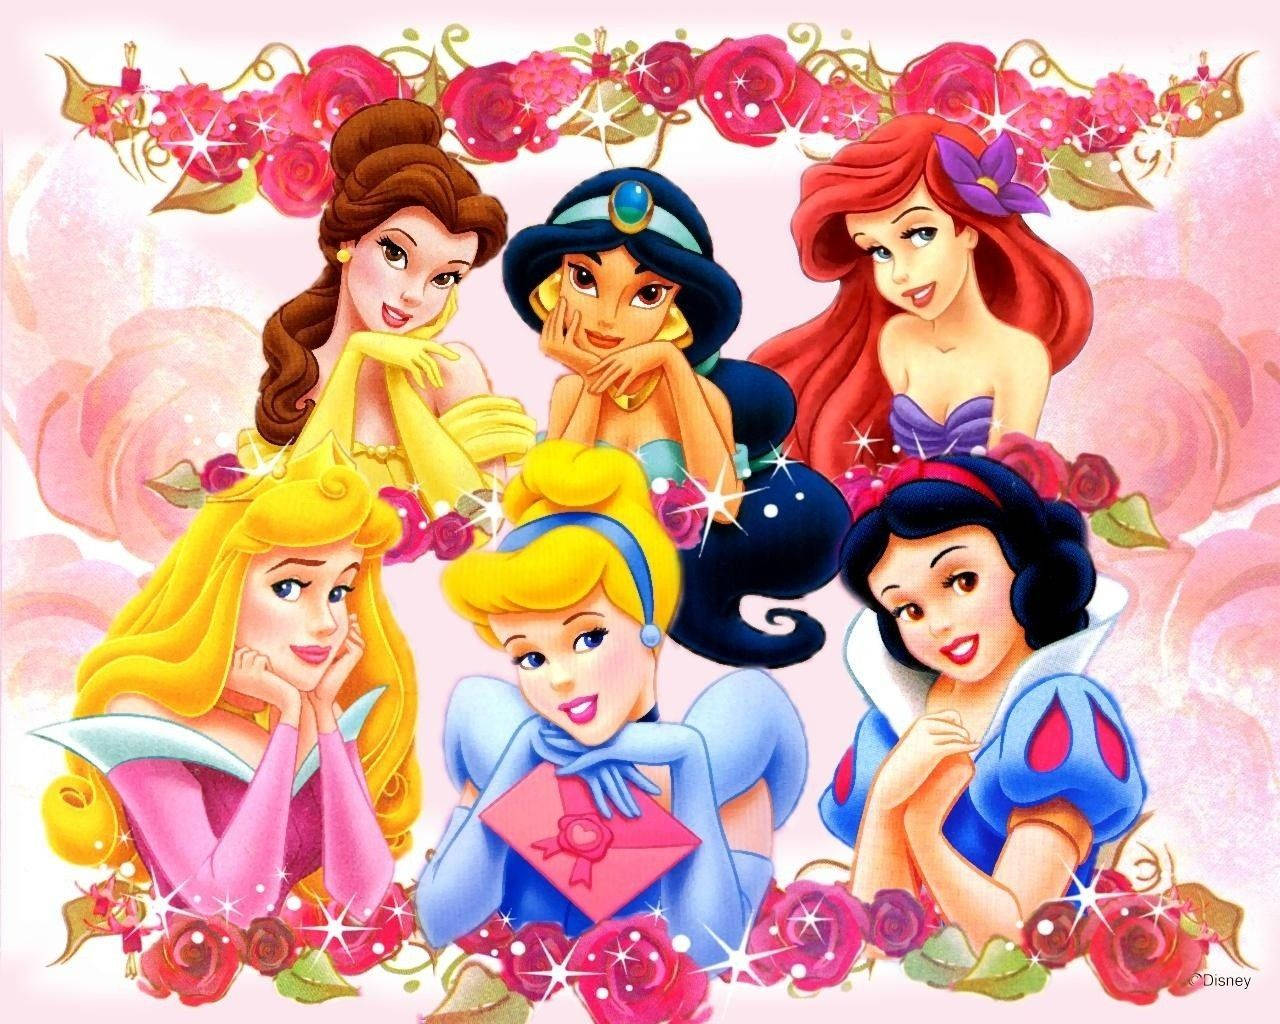 Disney aesthetic wallpapers disney princess #disney #disneyprincesses